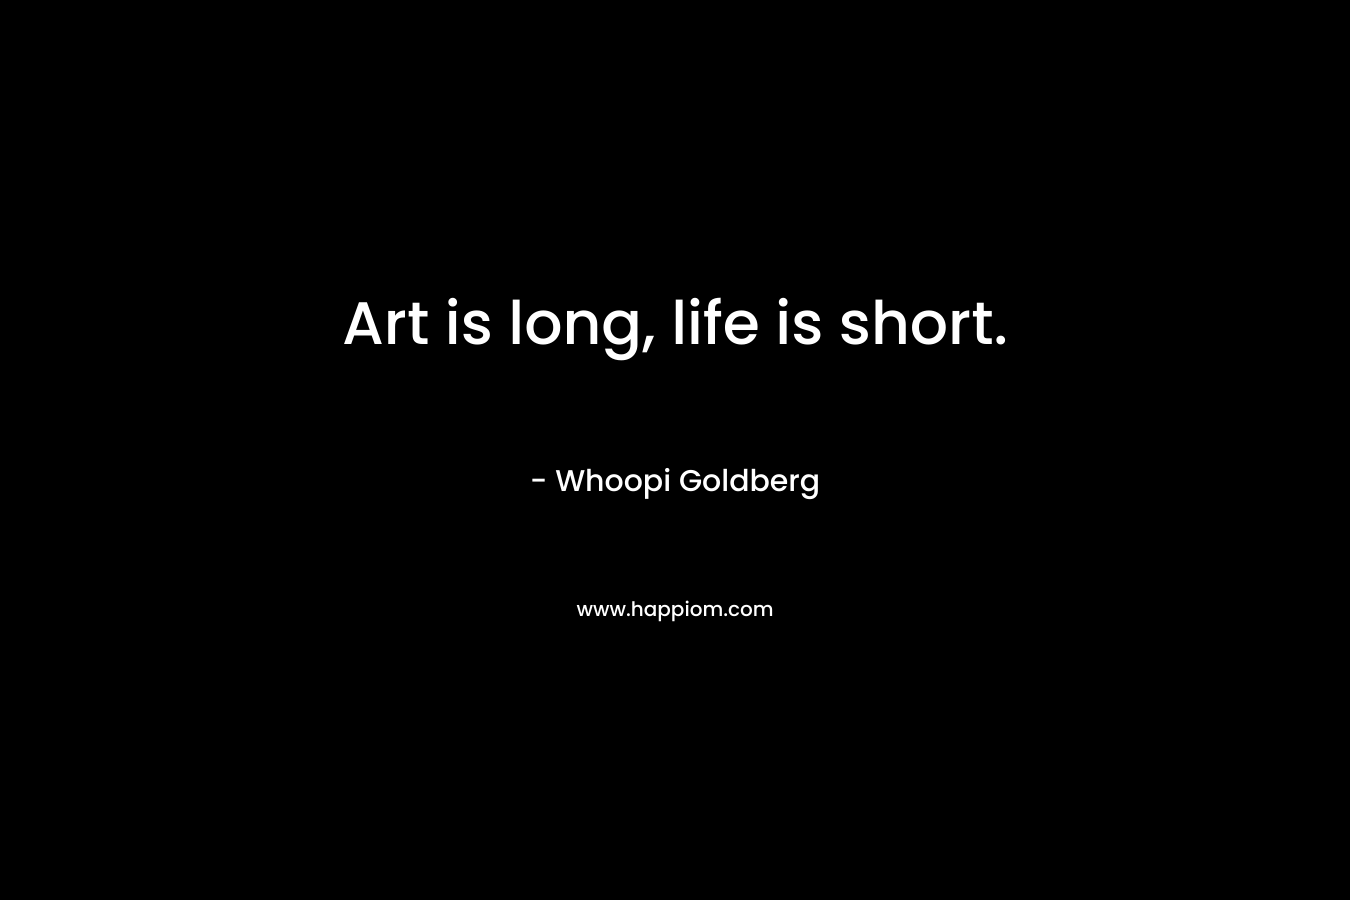 Art is long, life is short.